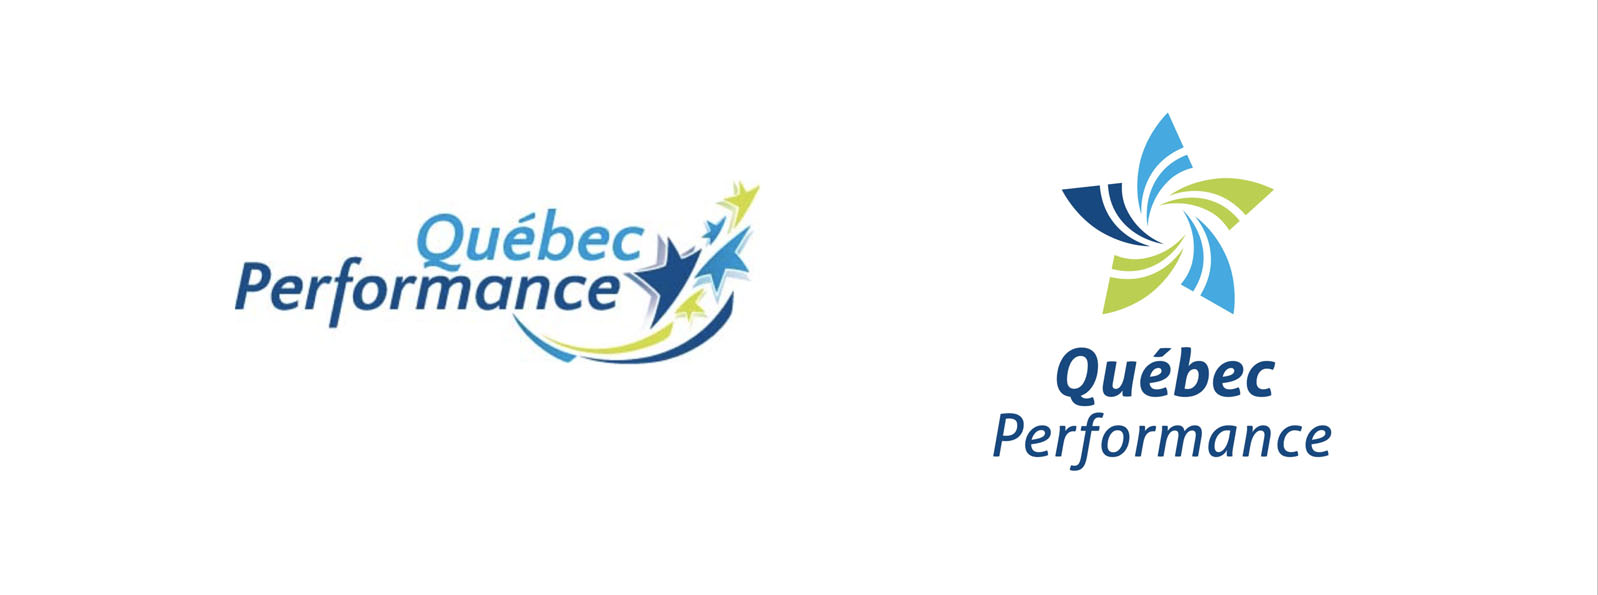 nouveau logo gymnastique quebec performance